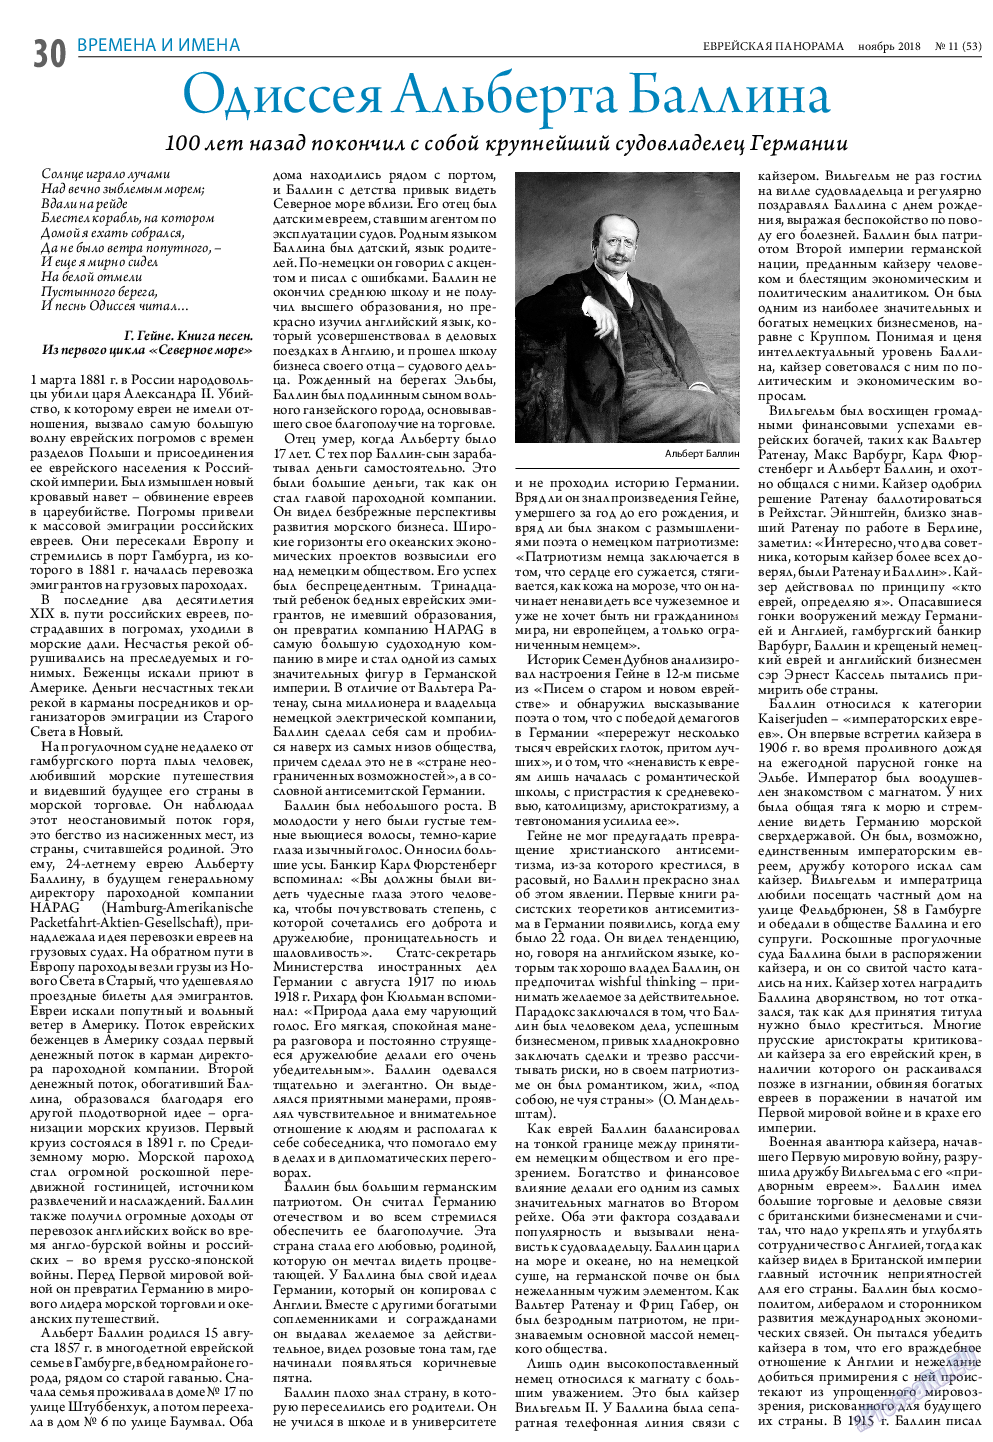 Еврейская панорама, газета. 2018 №11 стр.30